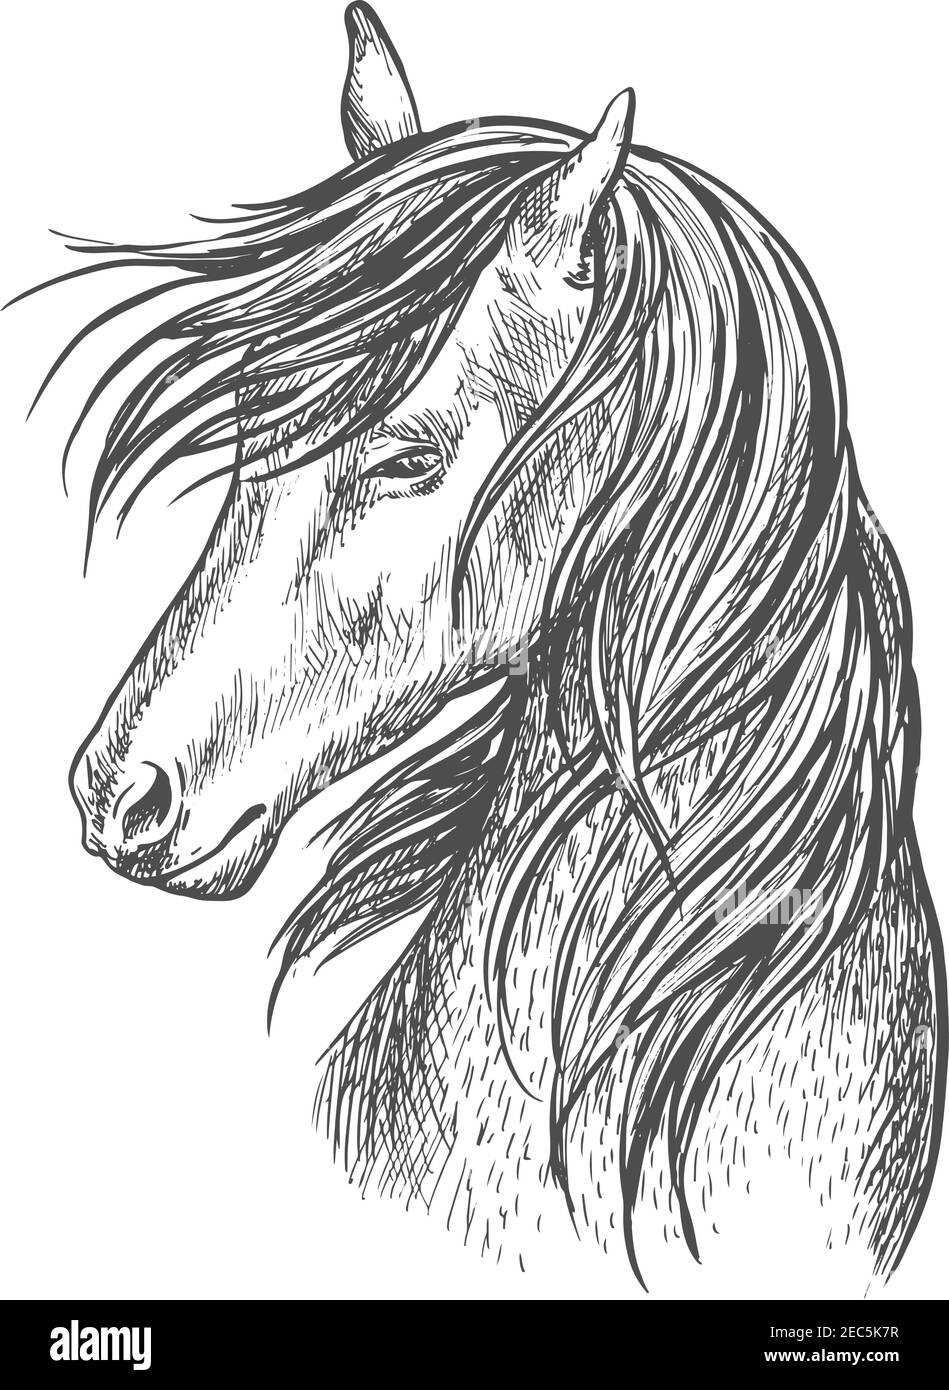 Pencil Drawings Of Horses Carolina Cup Drawings - Horse Pencil Sketch | Horse  pencil drawing, Horse drawings, Animal drawings sketches